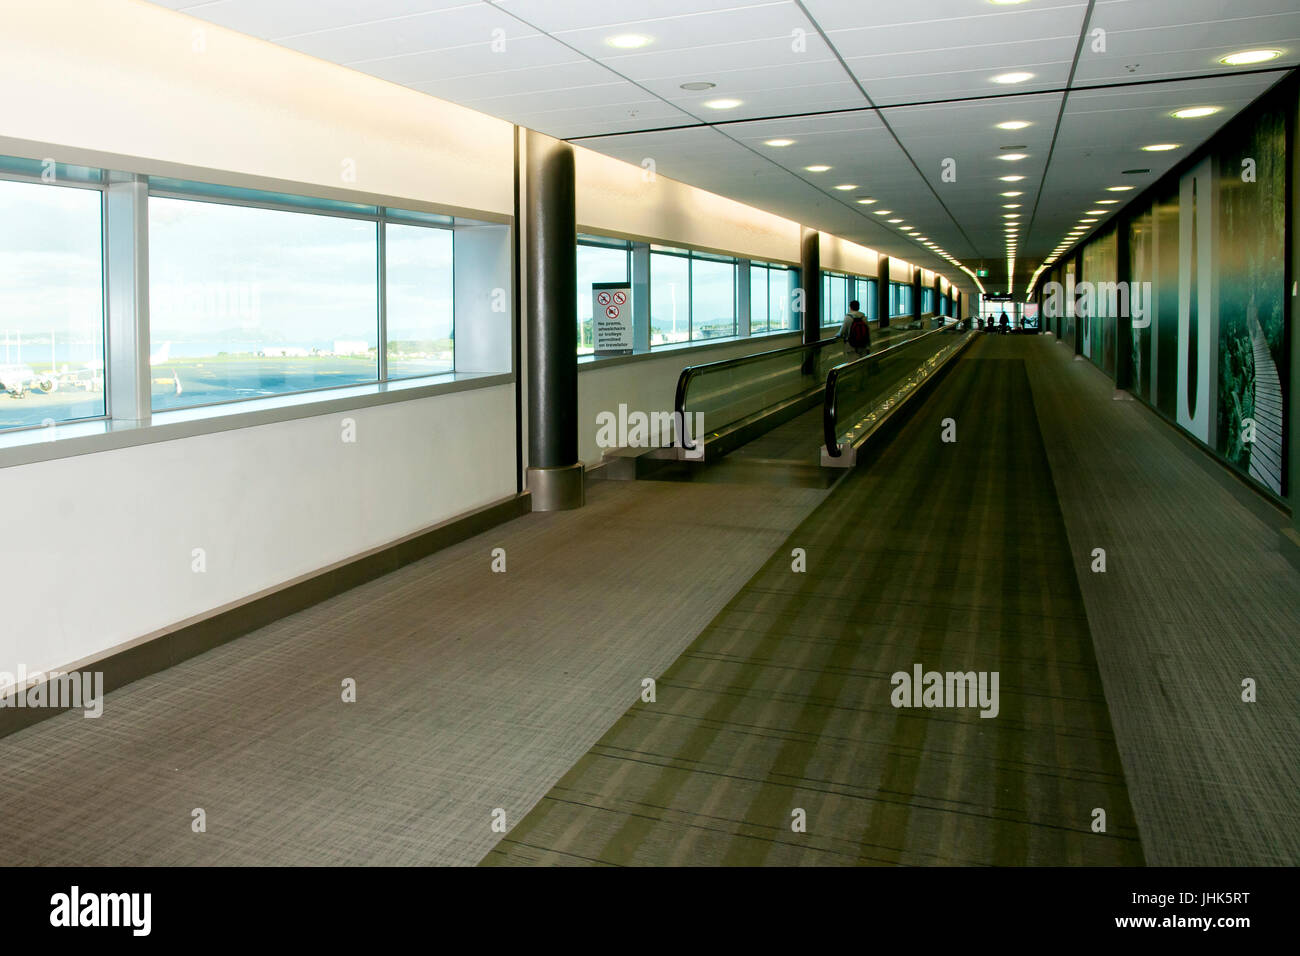 Moving Walkway in Airport Corridor Stock Photo